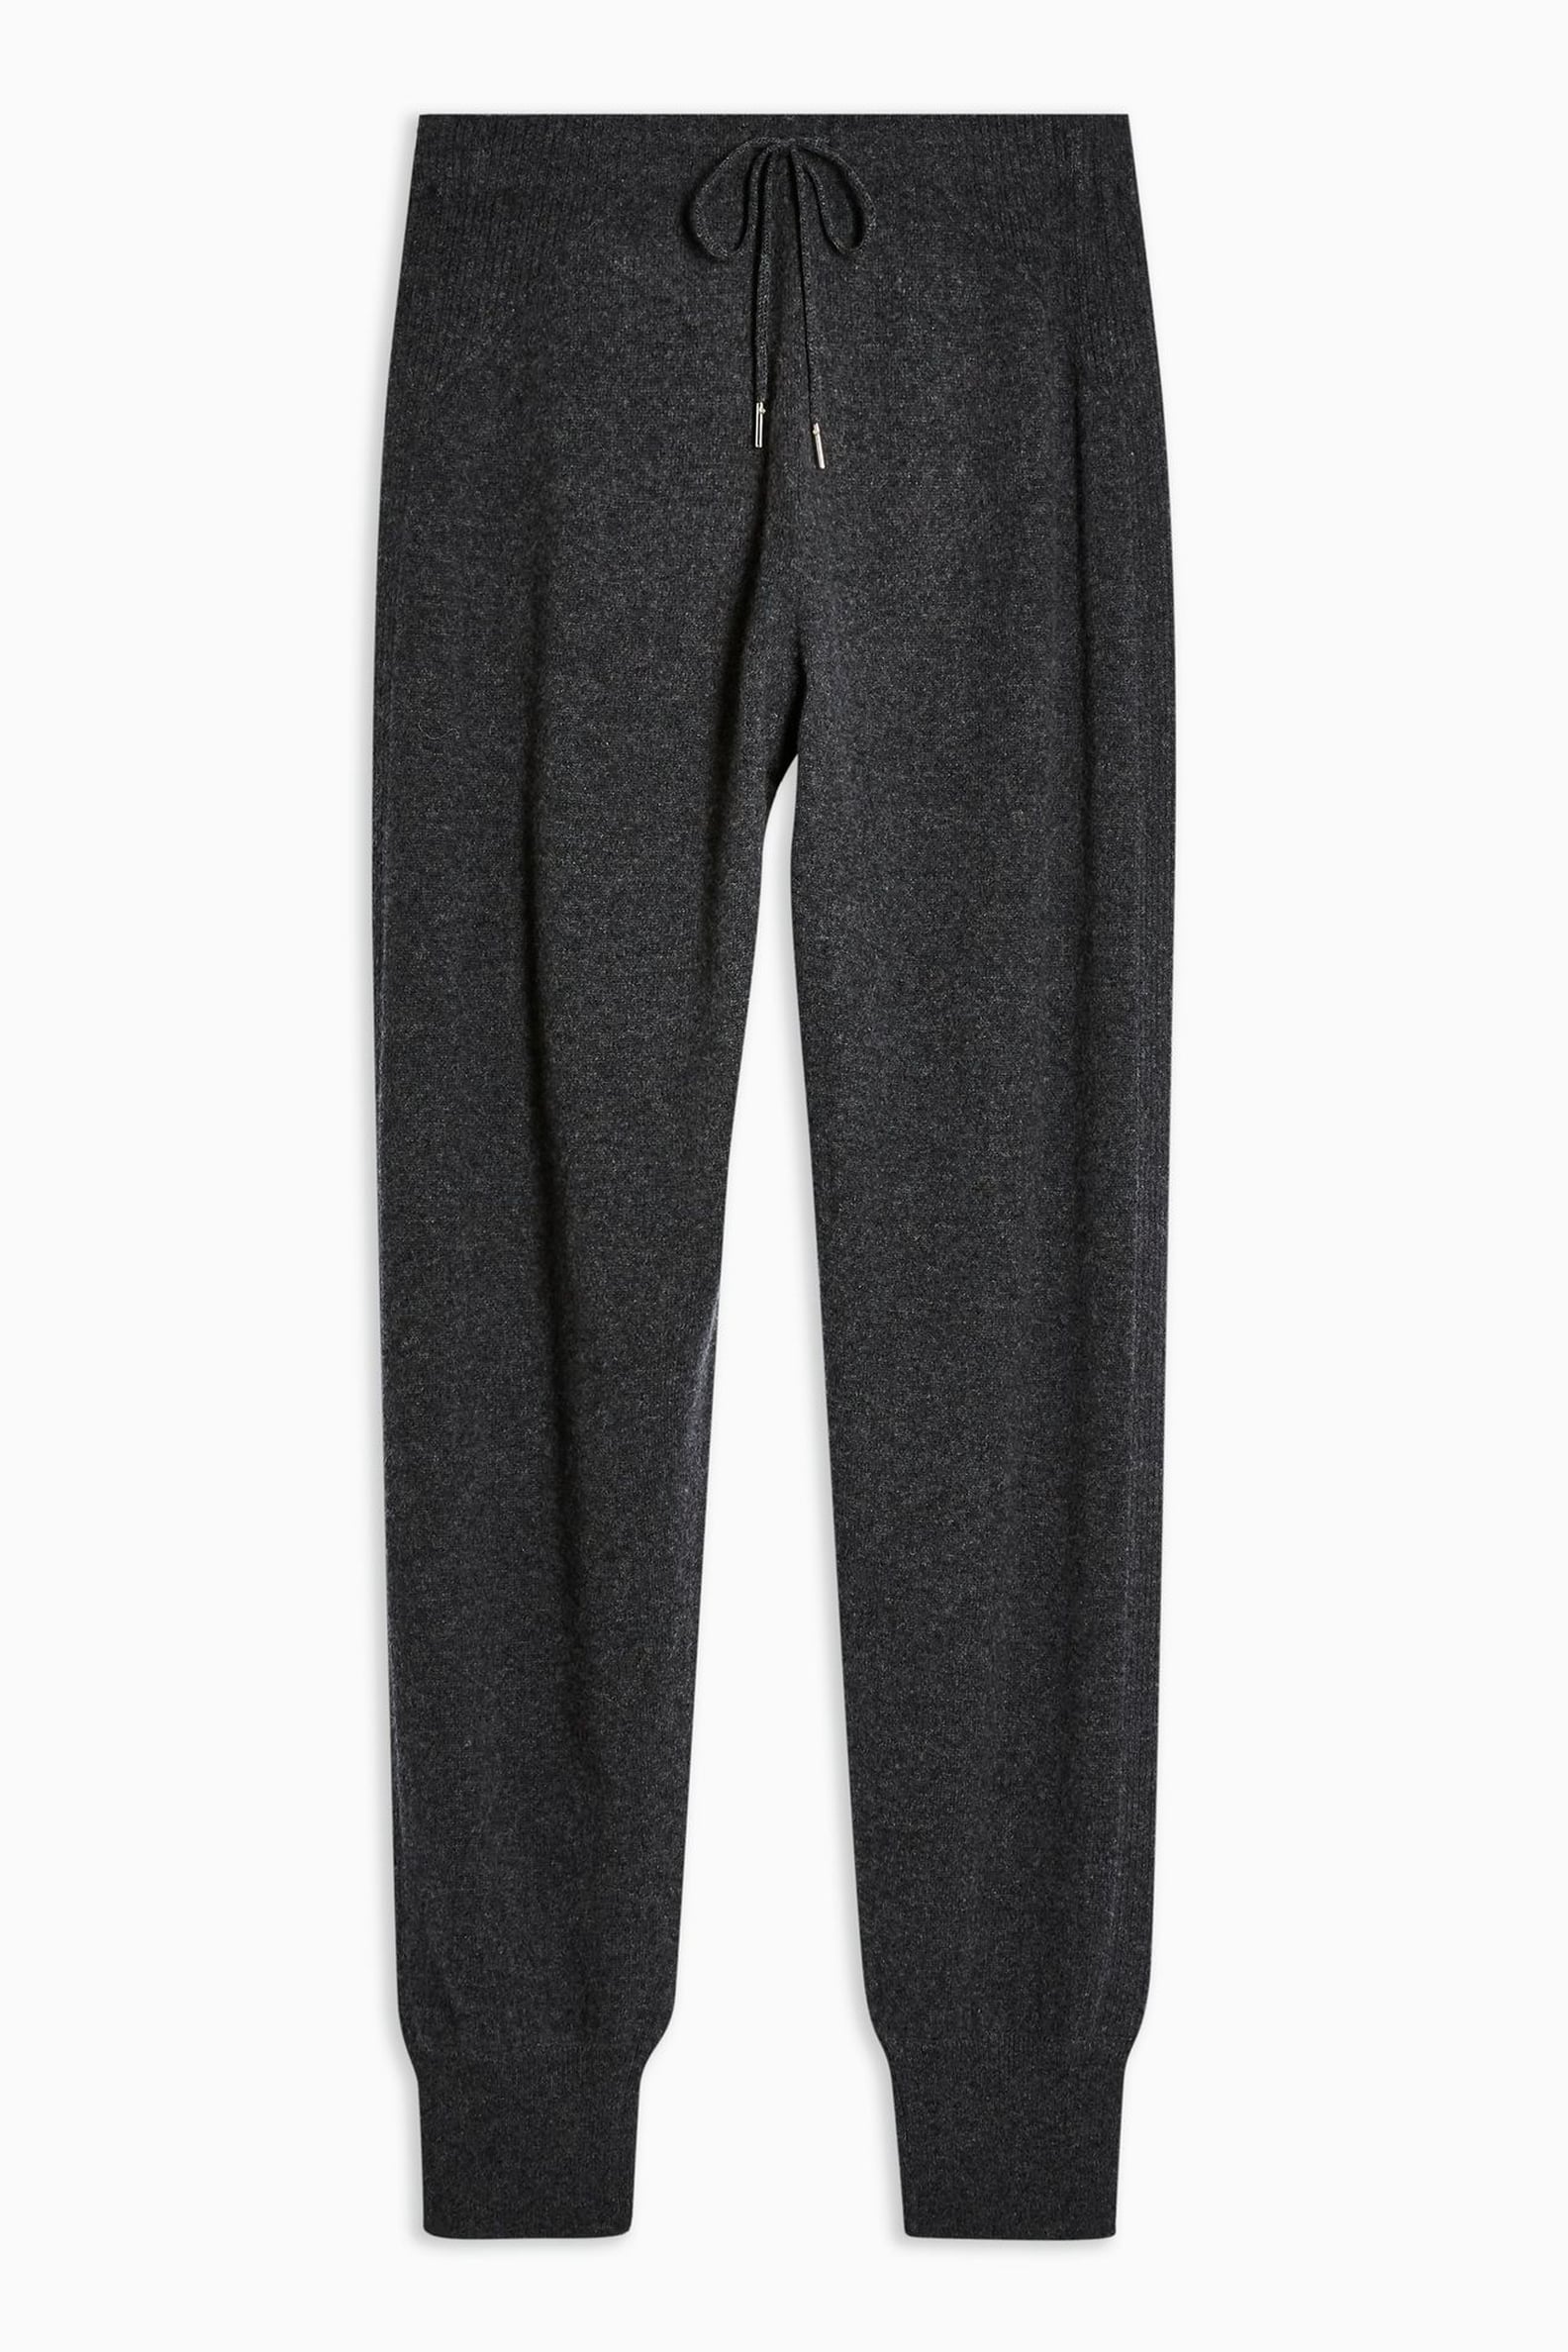 Cashmere Sweatpants That Are Worth the Splurge | POPSUGAR Fashion